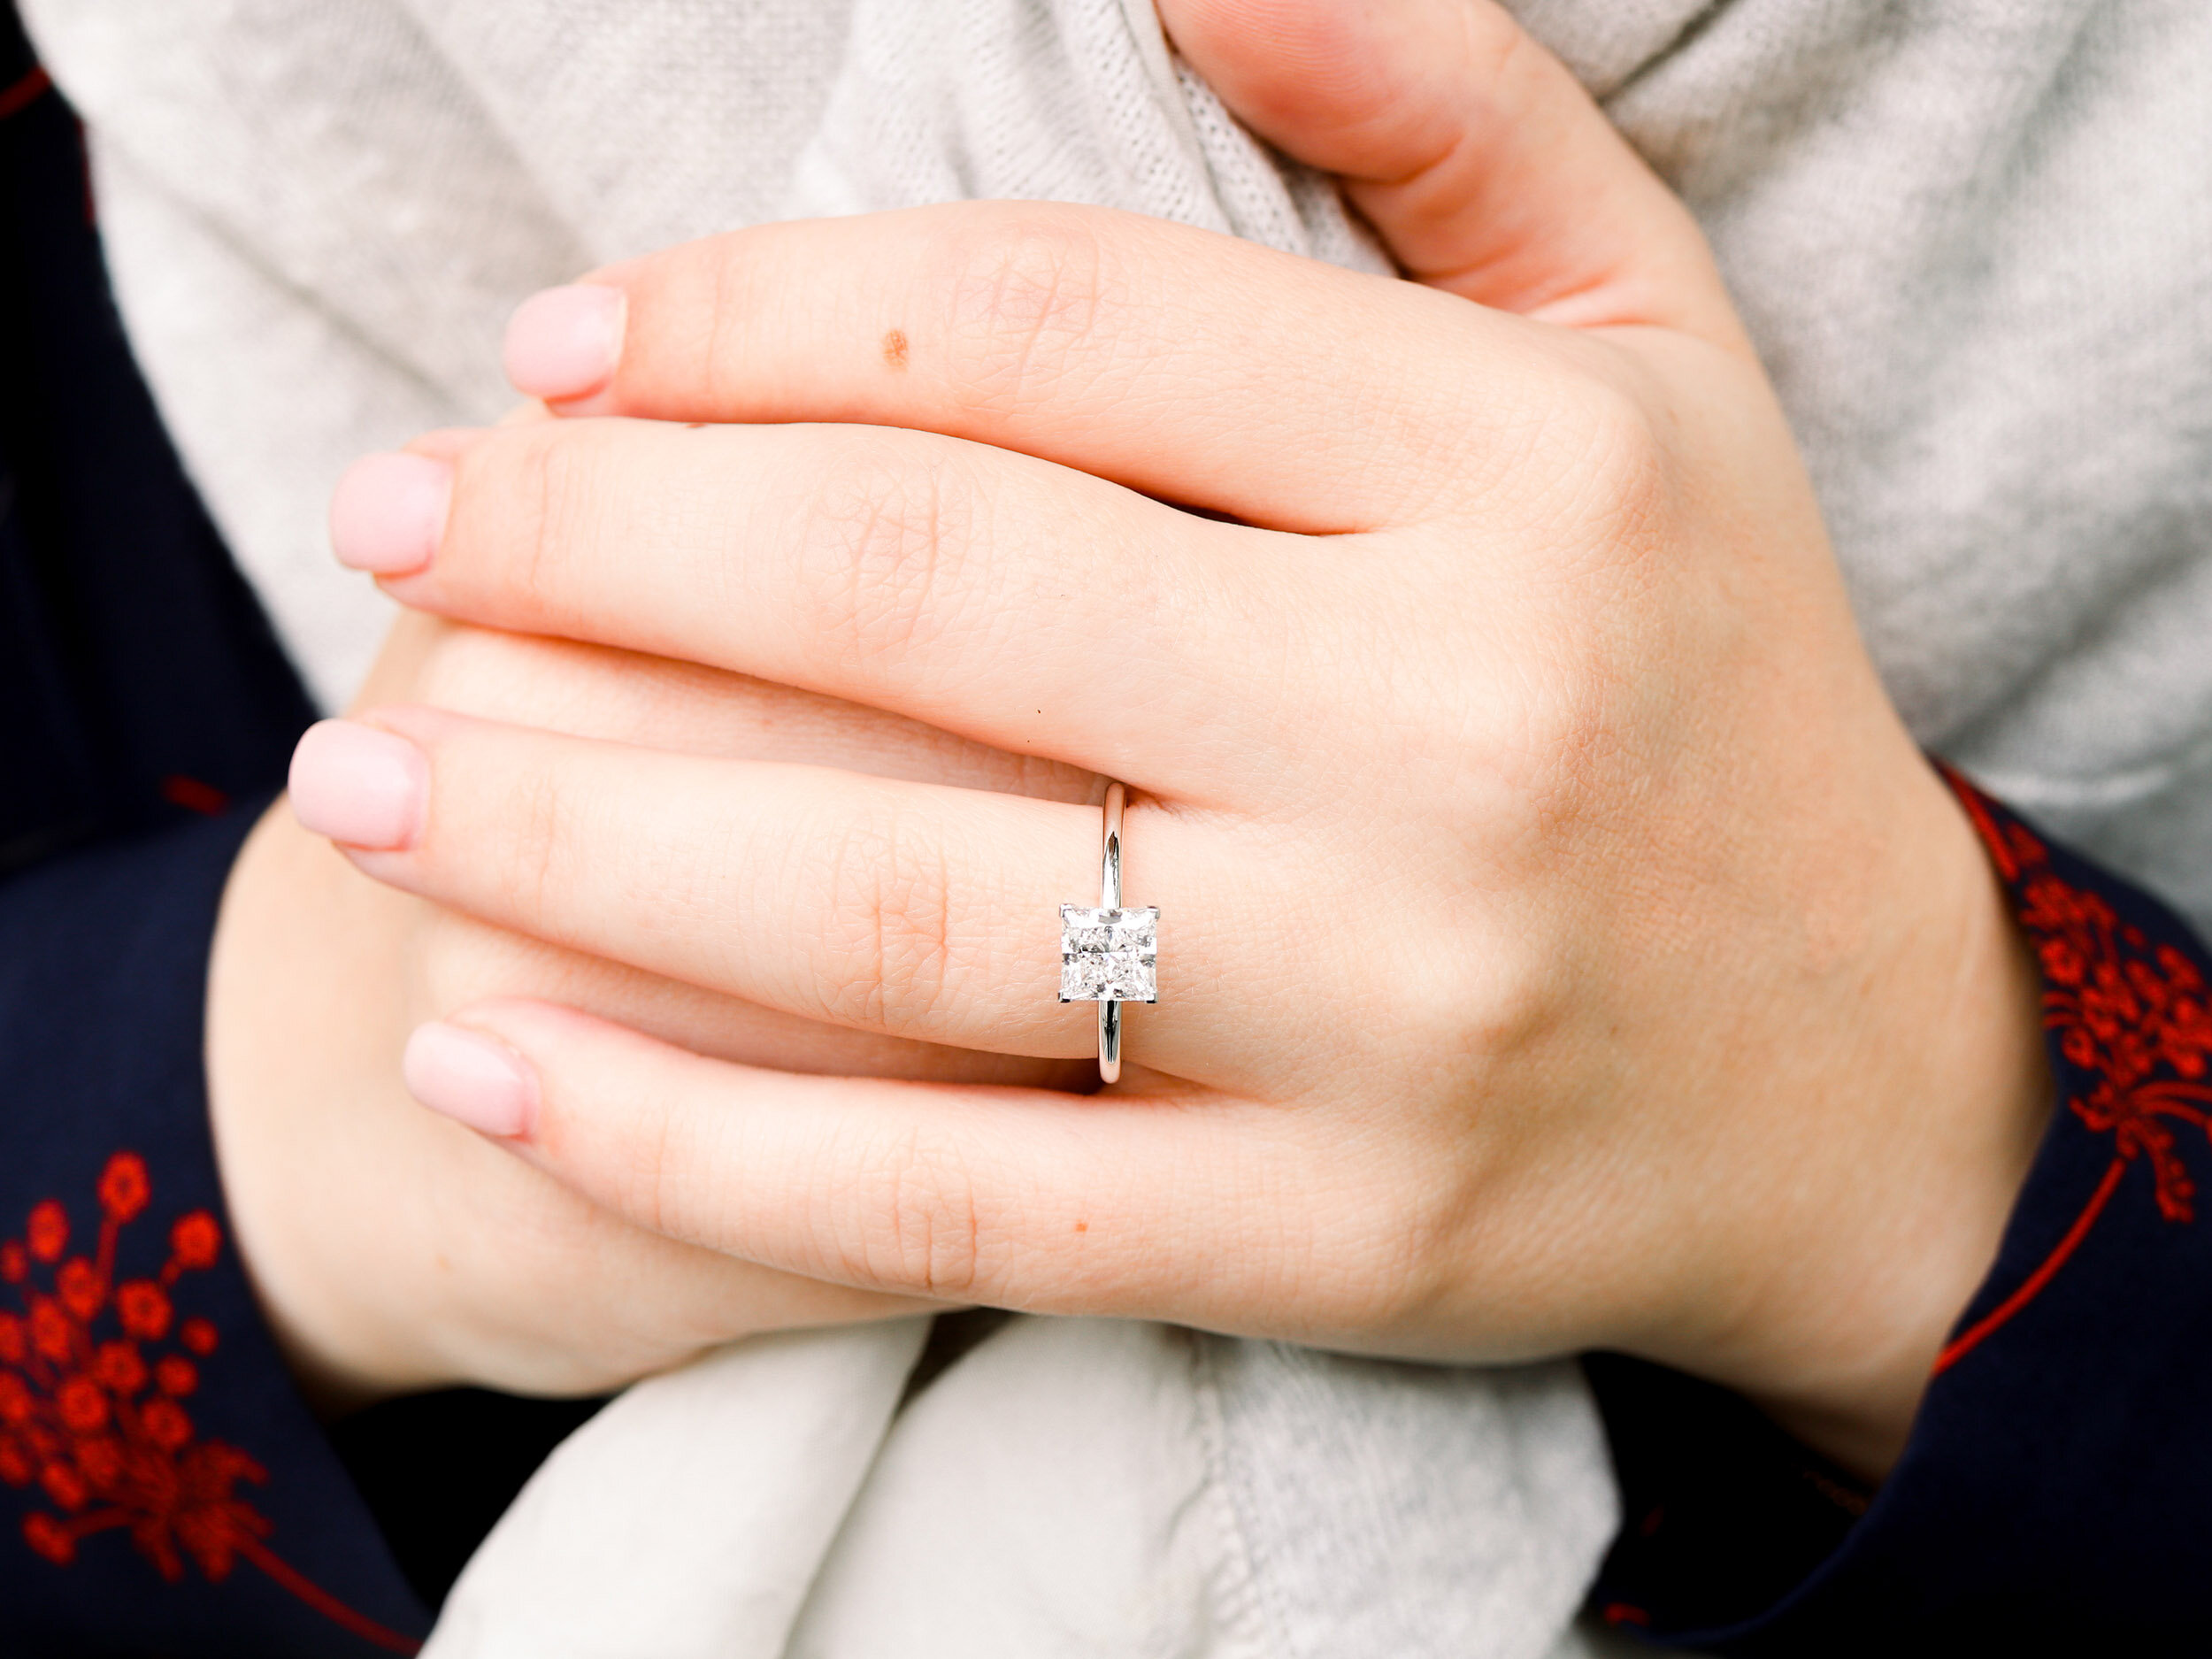 THE LEO First Light Diamond Princess-Cut Engagement Ring 1 ct tw 14K White  Gold | Kay